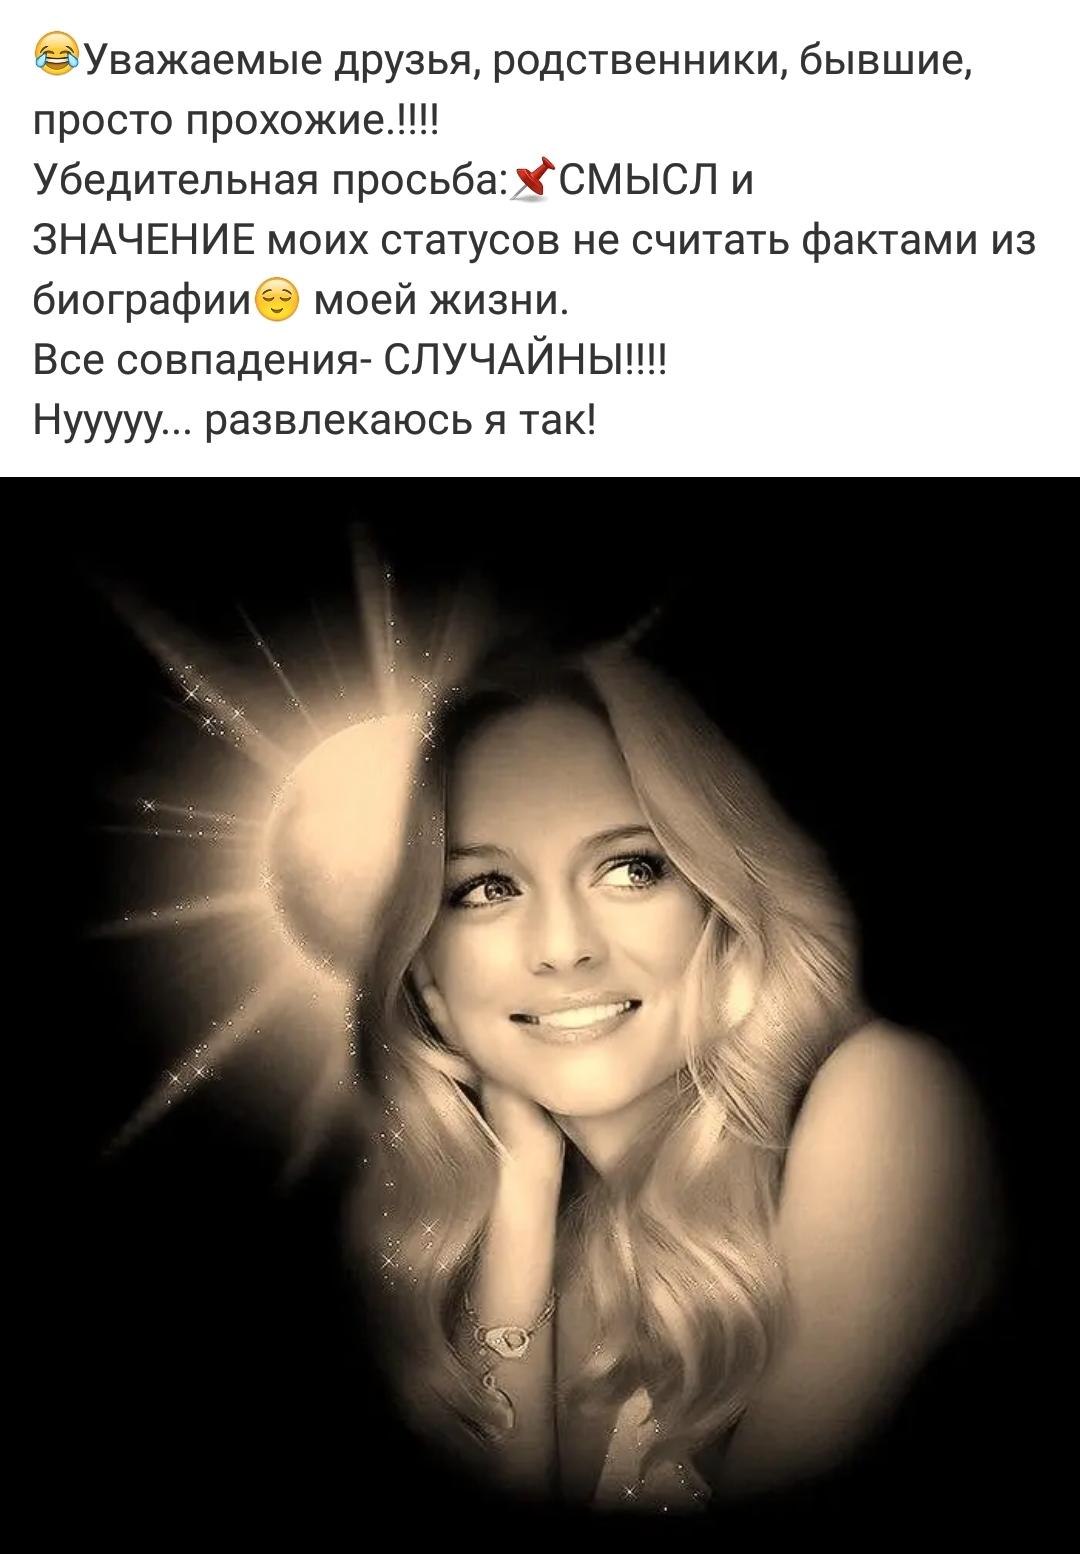 ***Victoria Viktorovna*** - 12  2018  02:24